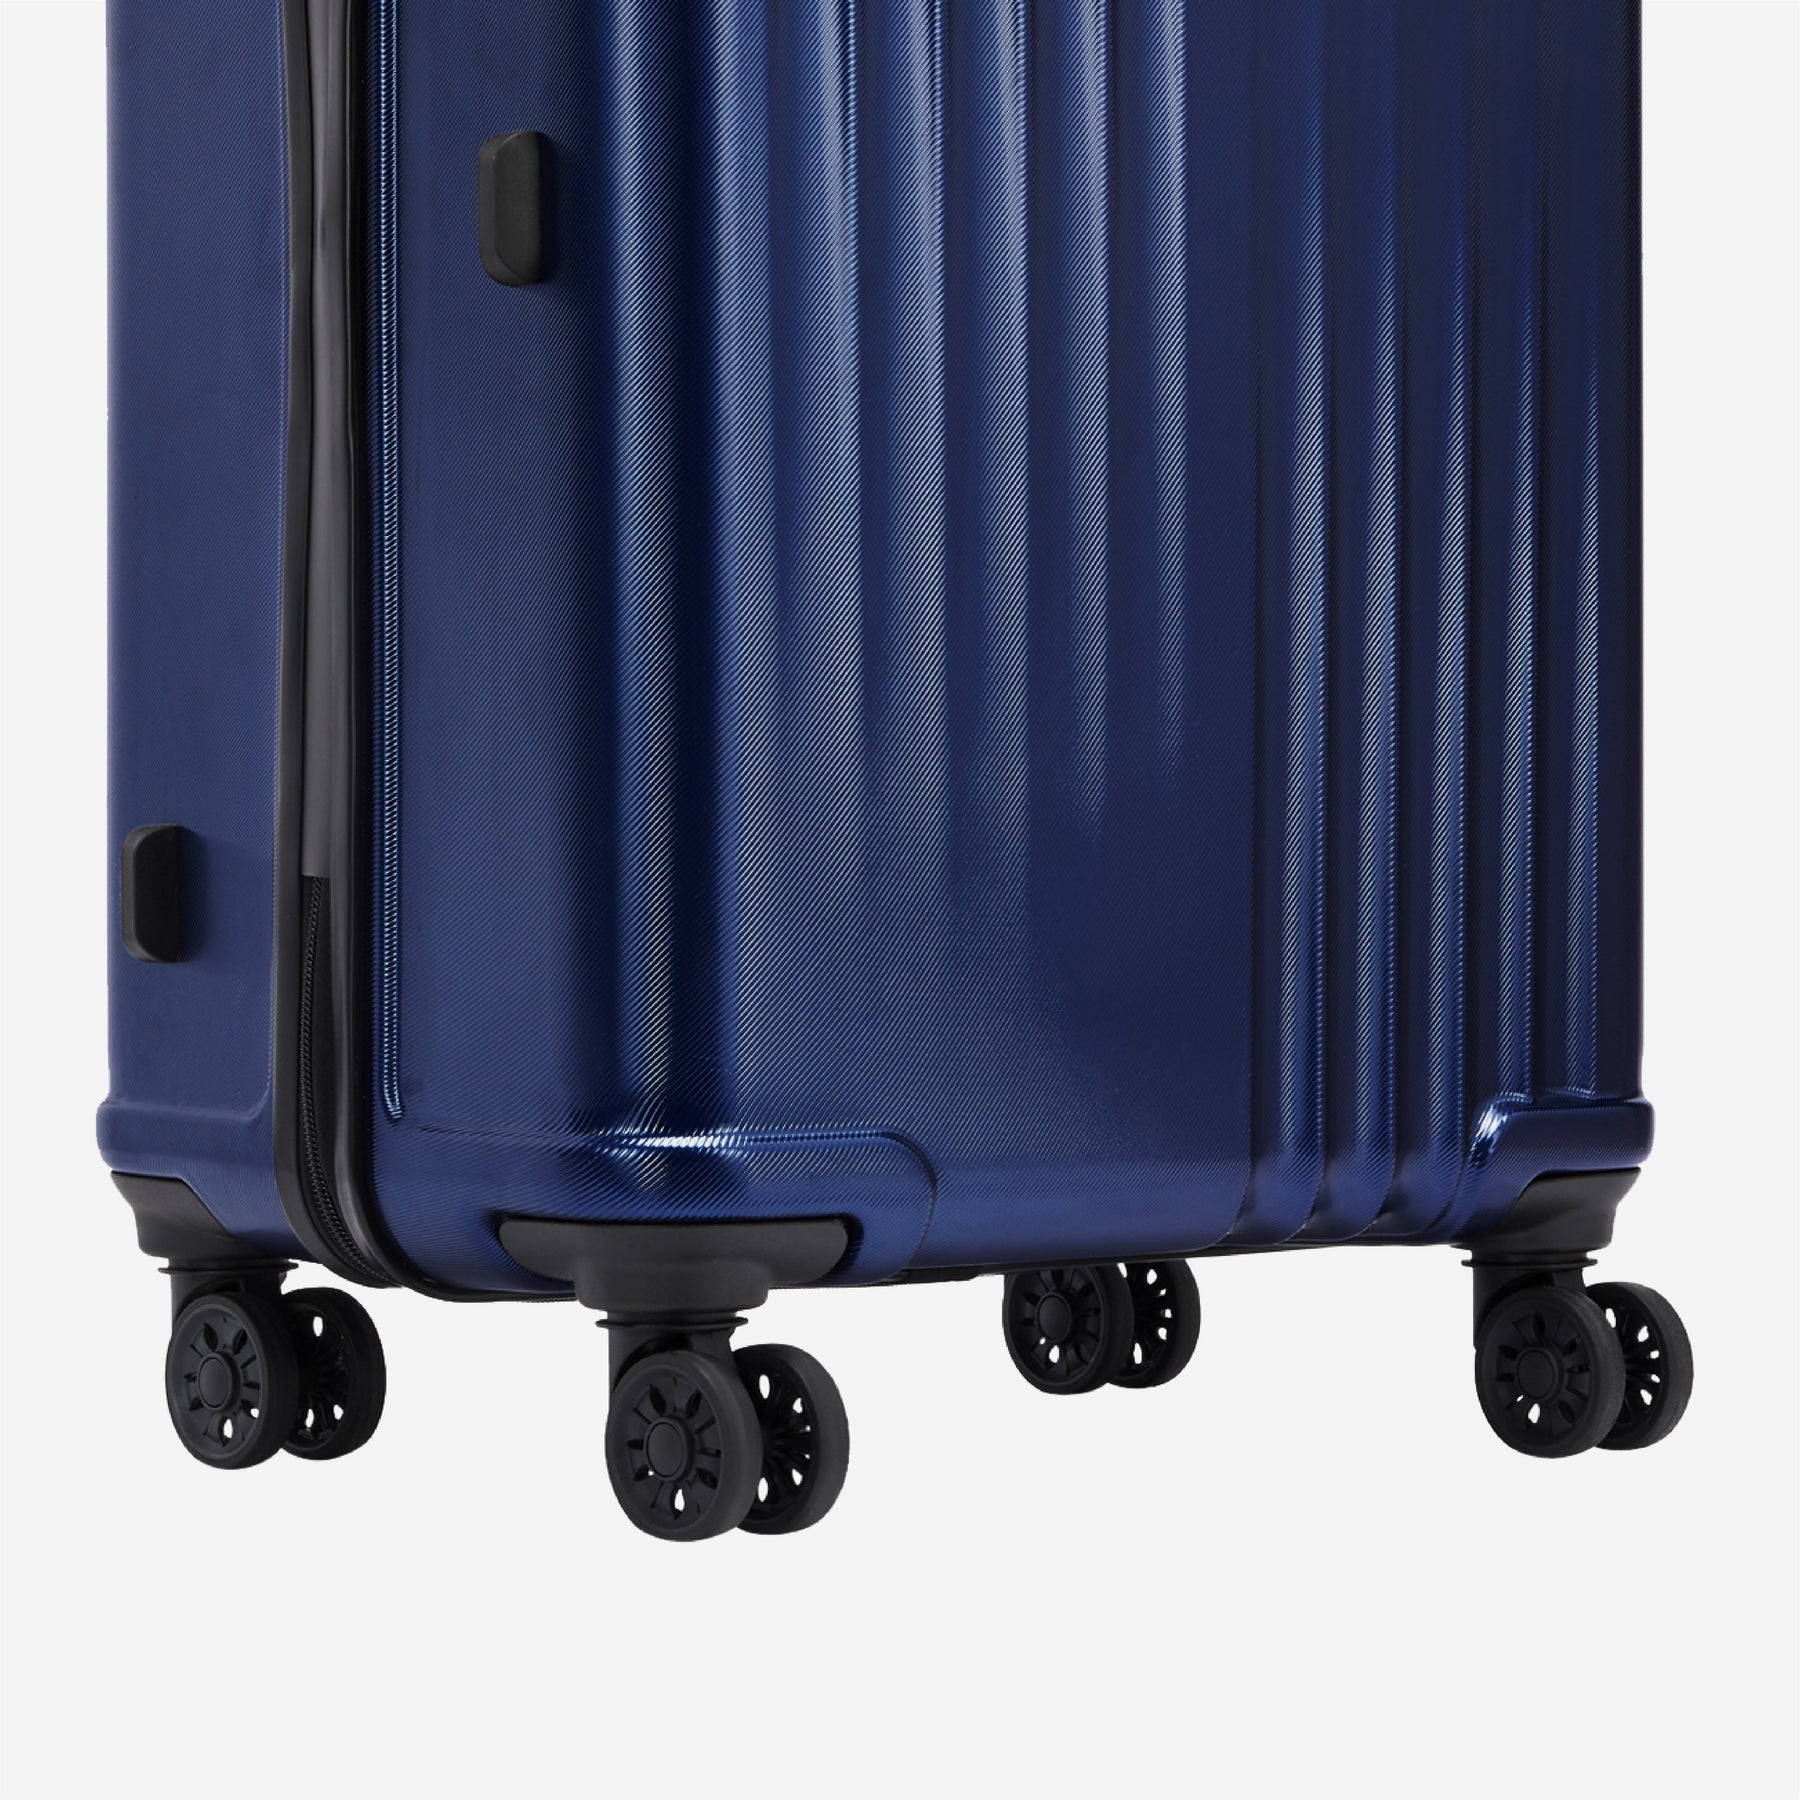 Ryder Hard Luggage Combo Set (Small and Medium) - Midnight Blue